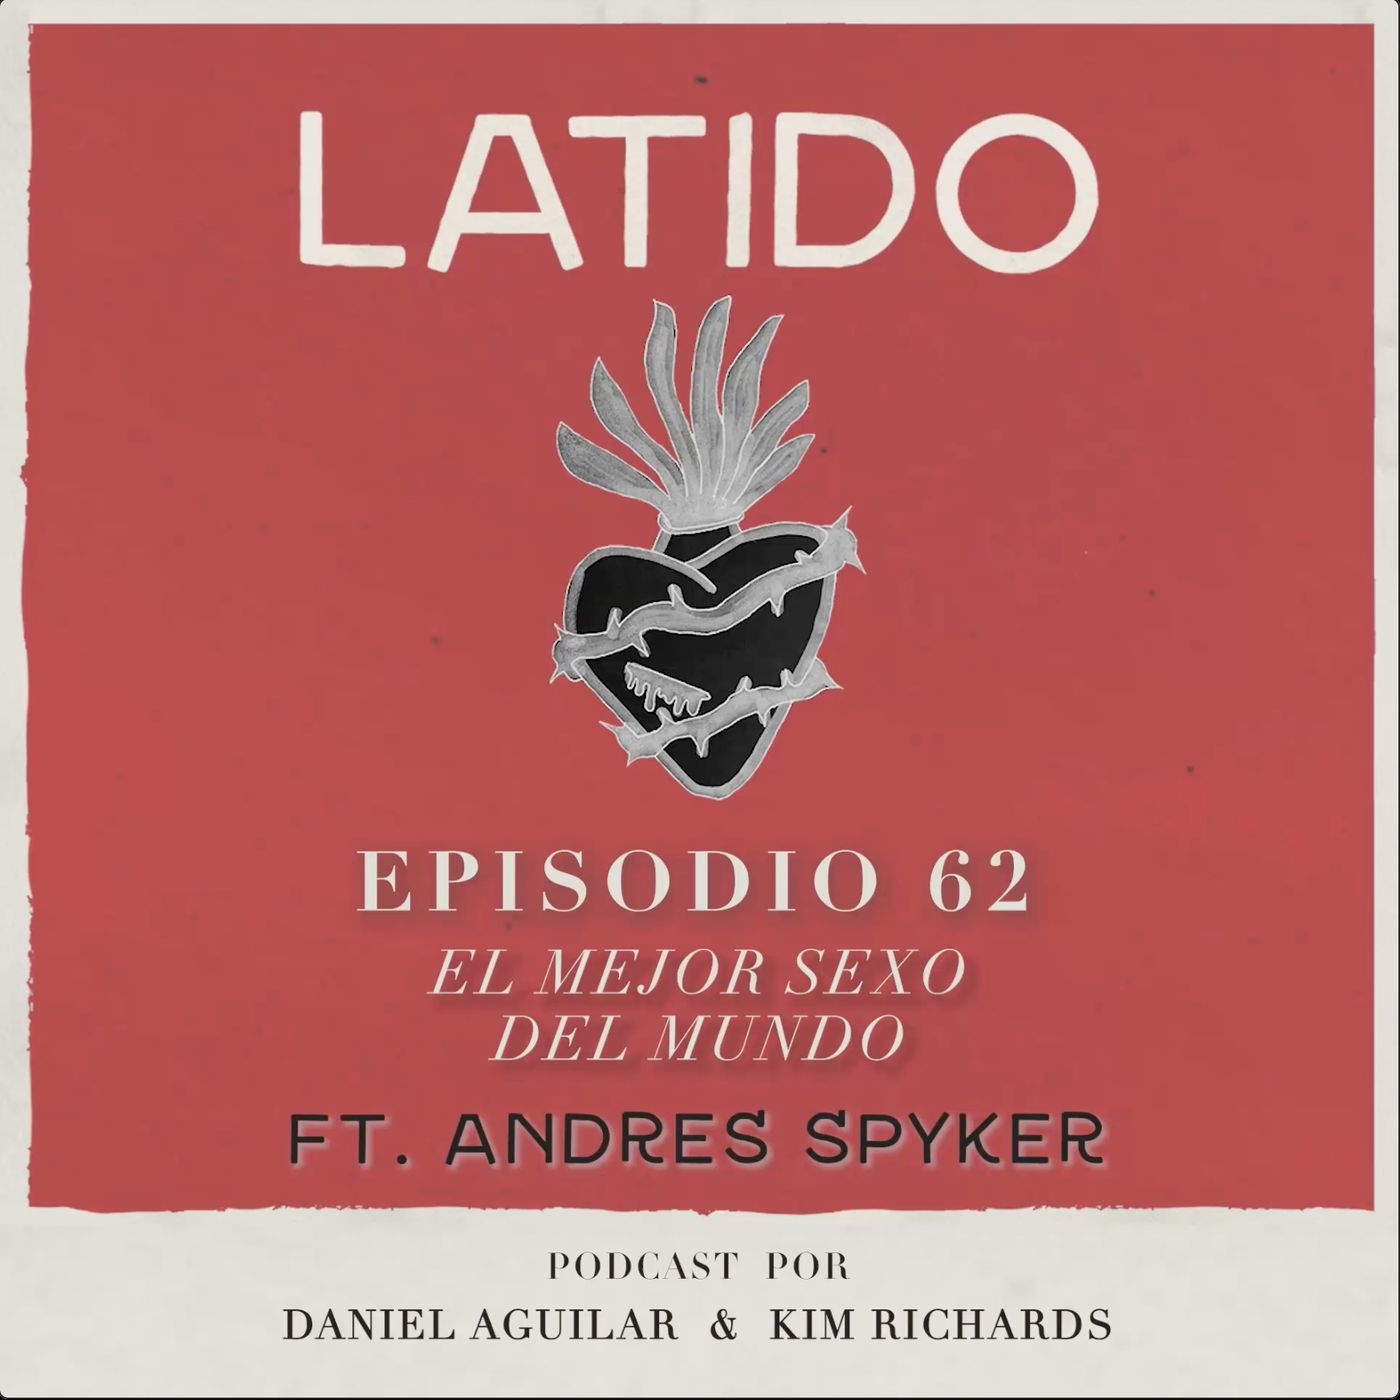 Latido Podcast - Episodio 62 - El mejor sexo del mundo ft. Andres Spyker